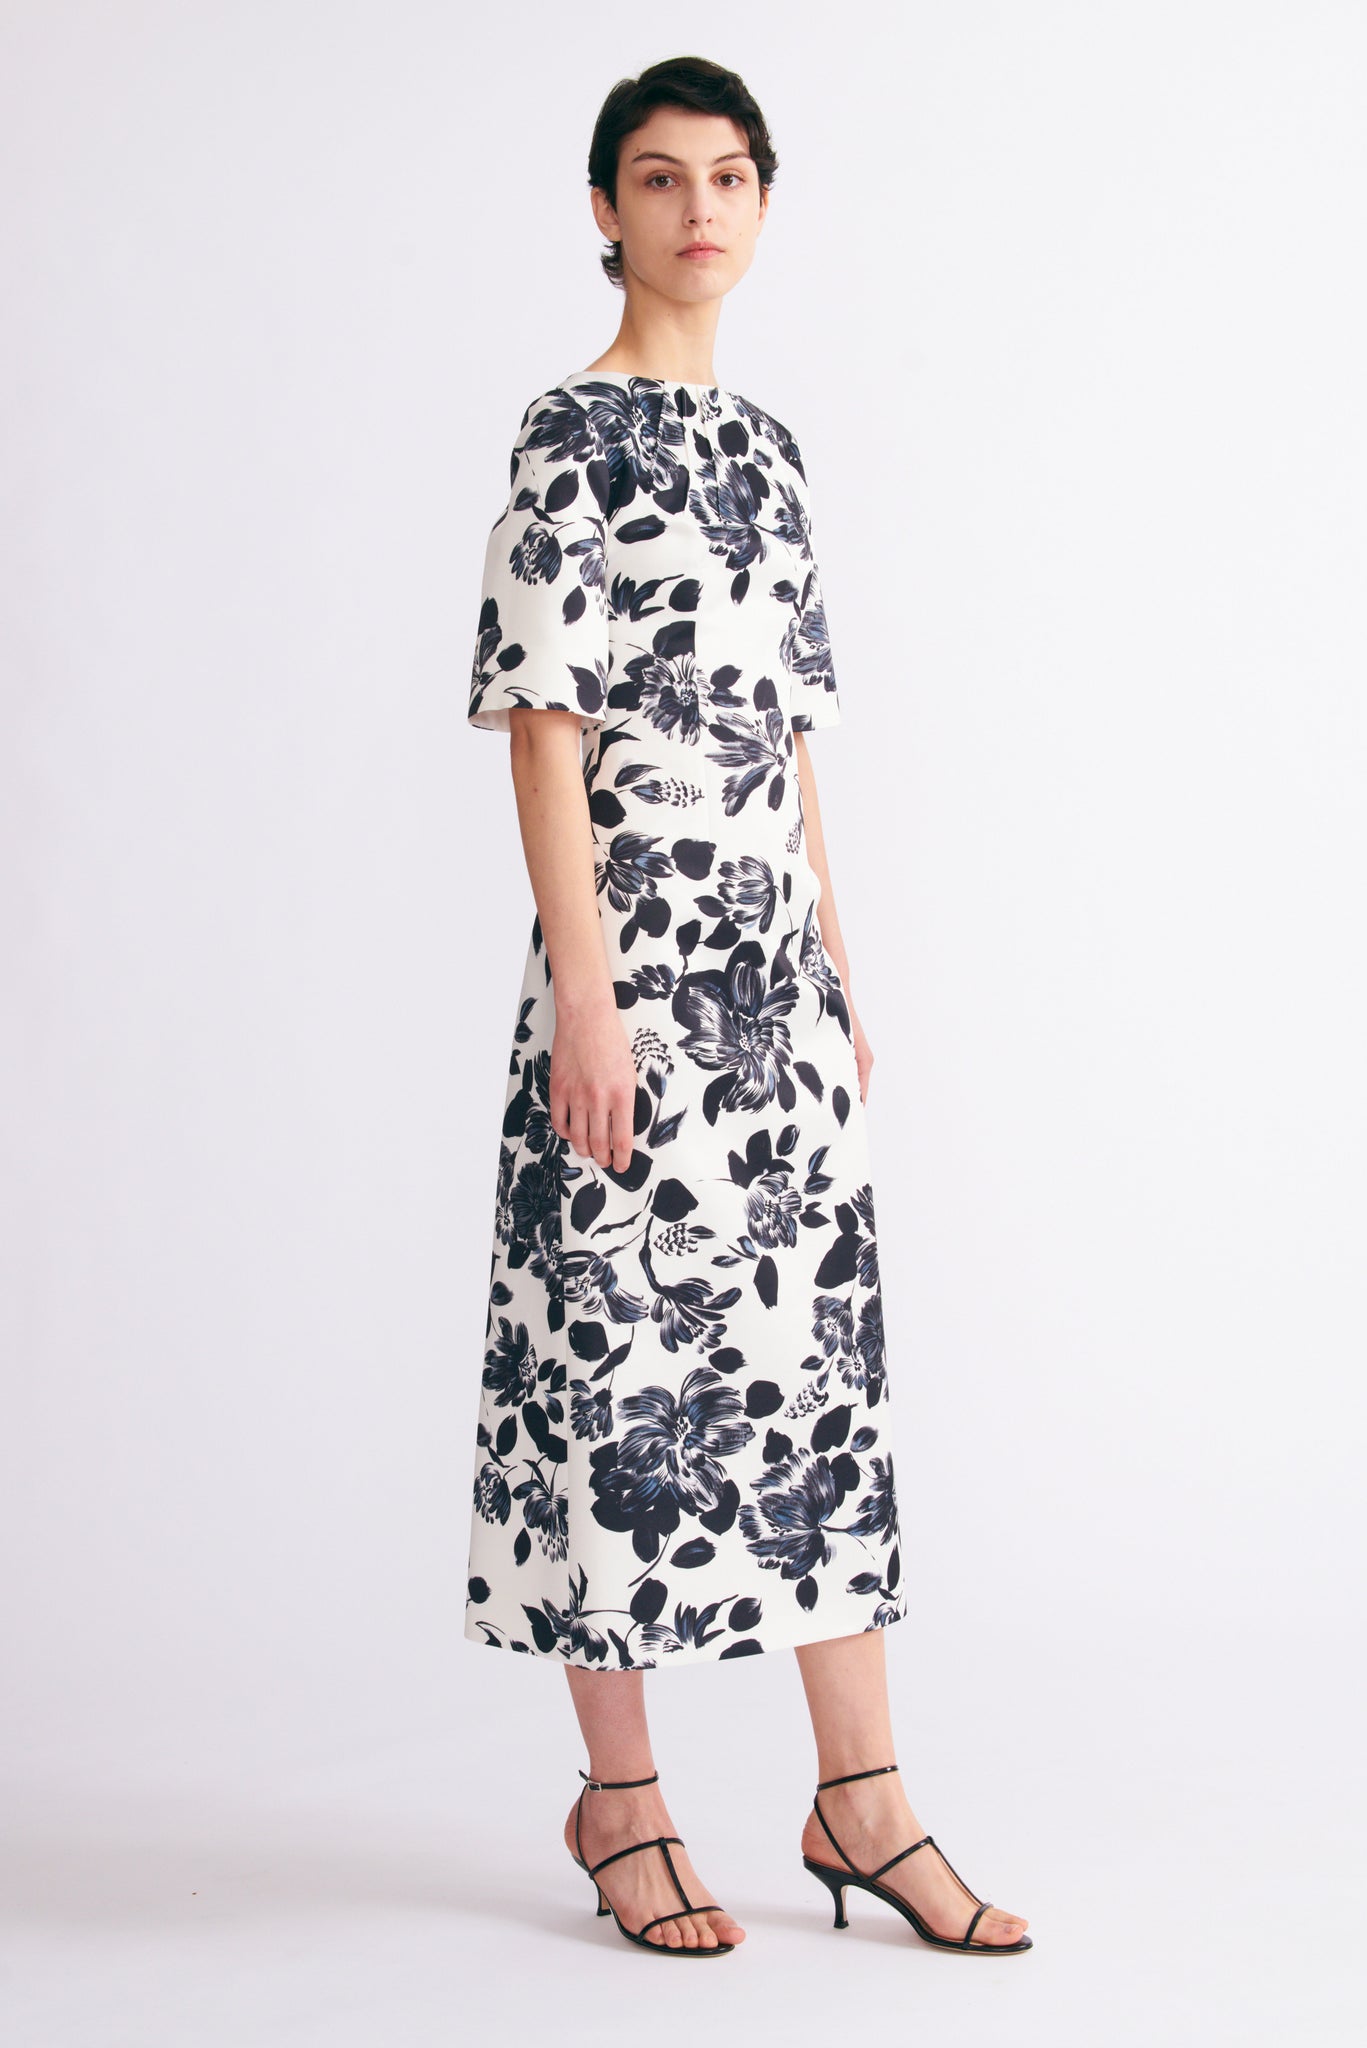 Kora Dress in Black and White Floral Print on Twill | Emilia Wickstead